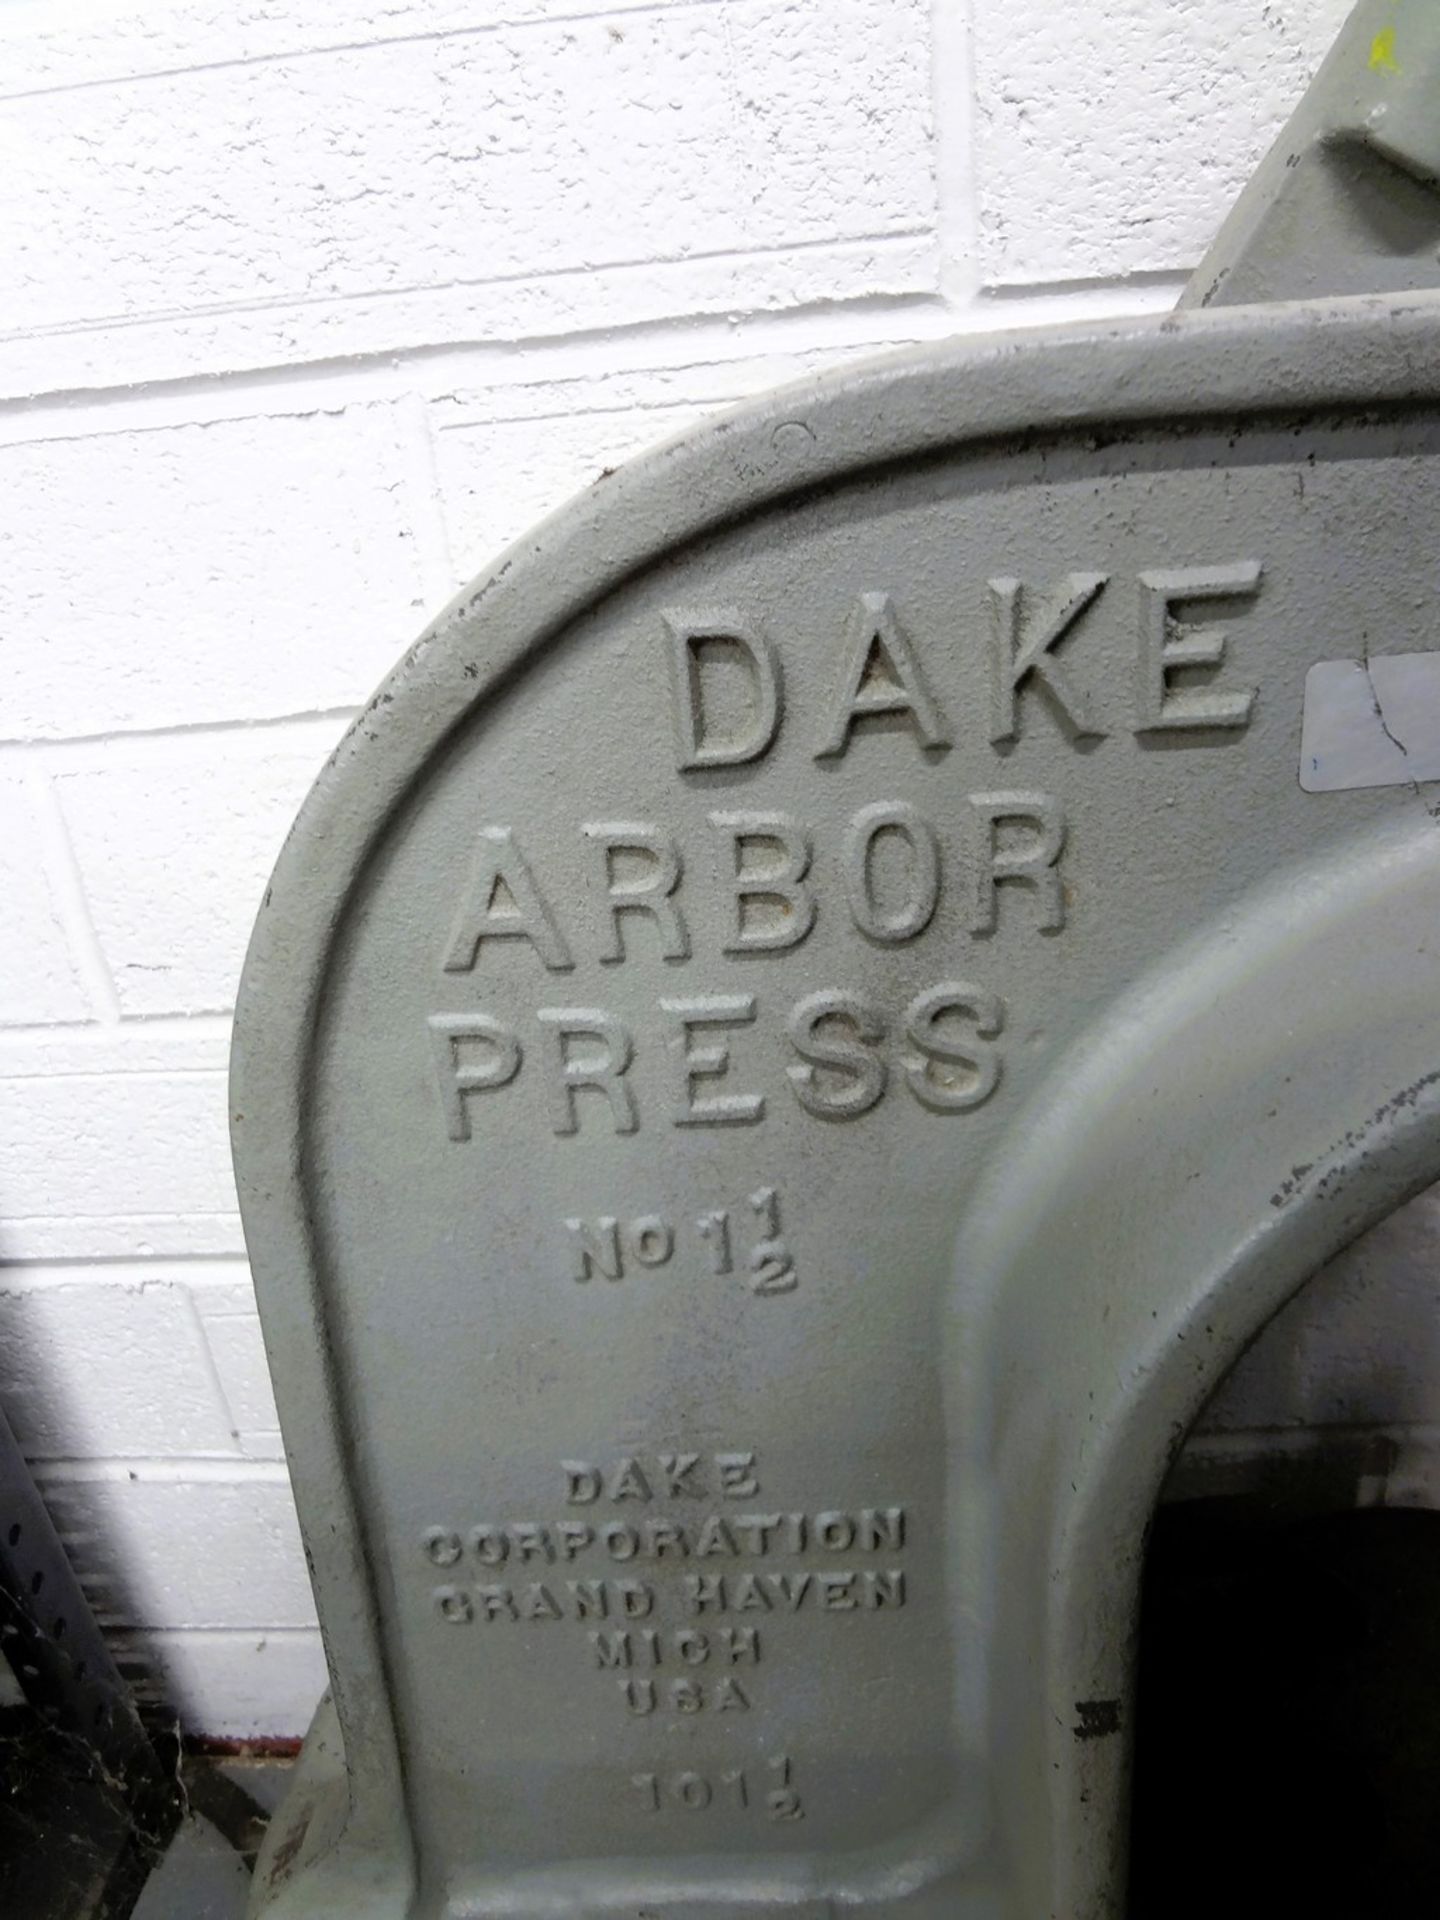 Dake No. 1-1/2 Bench Type Arbor Press - Image 3 of 3